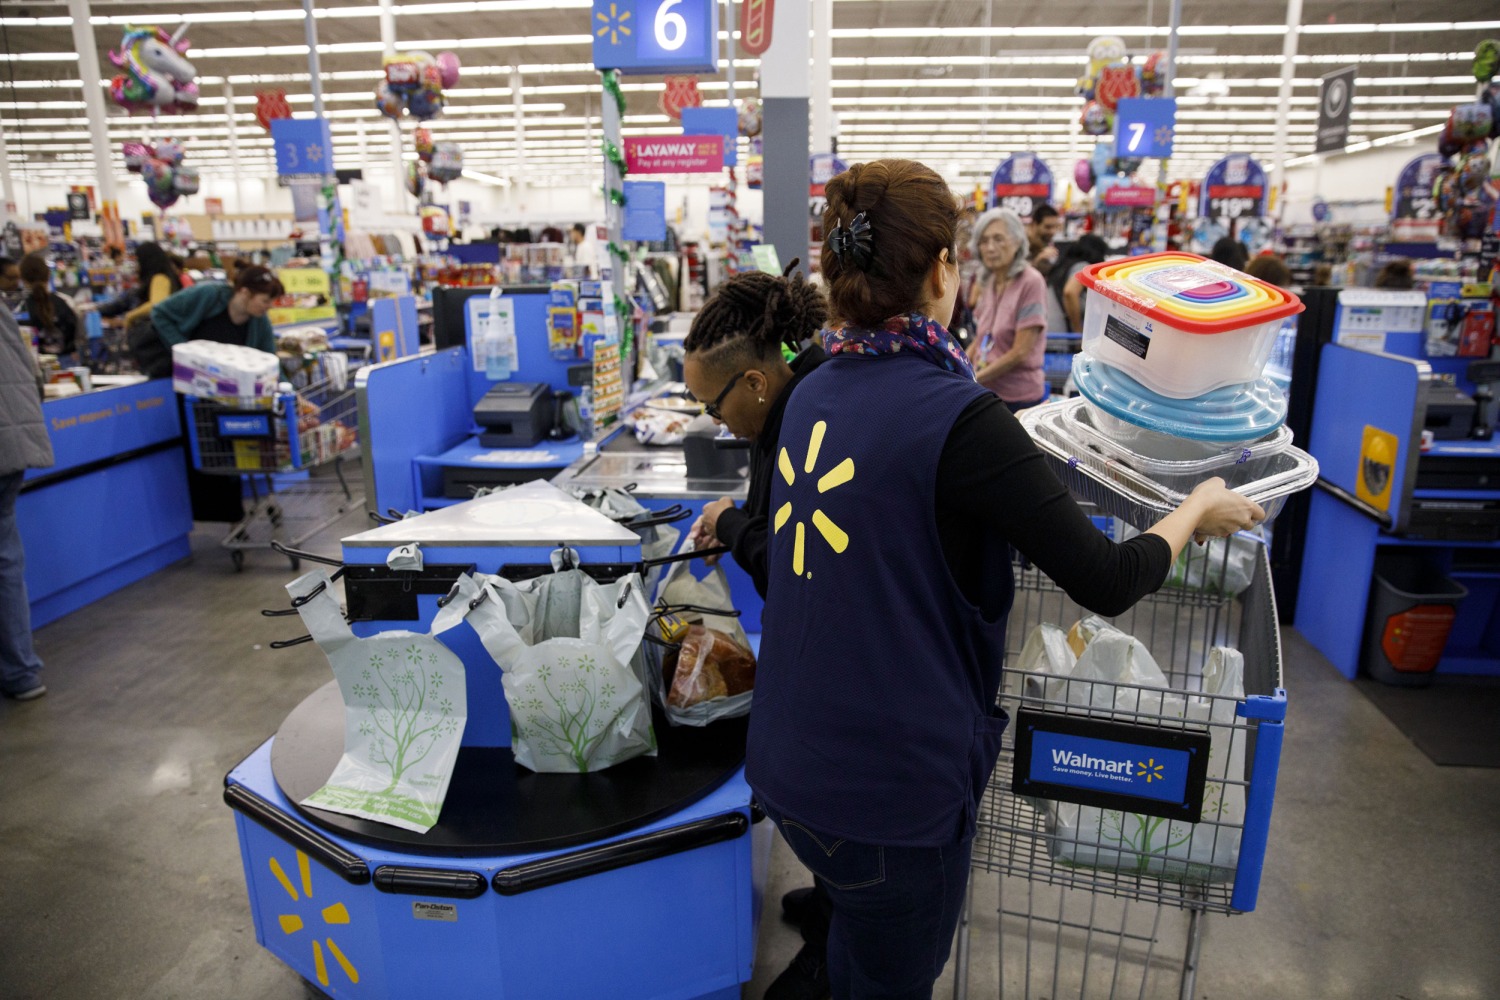 Walmart lawsuit: Women are suing again over gender discrimination - Vox